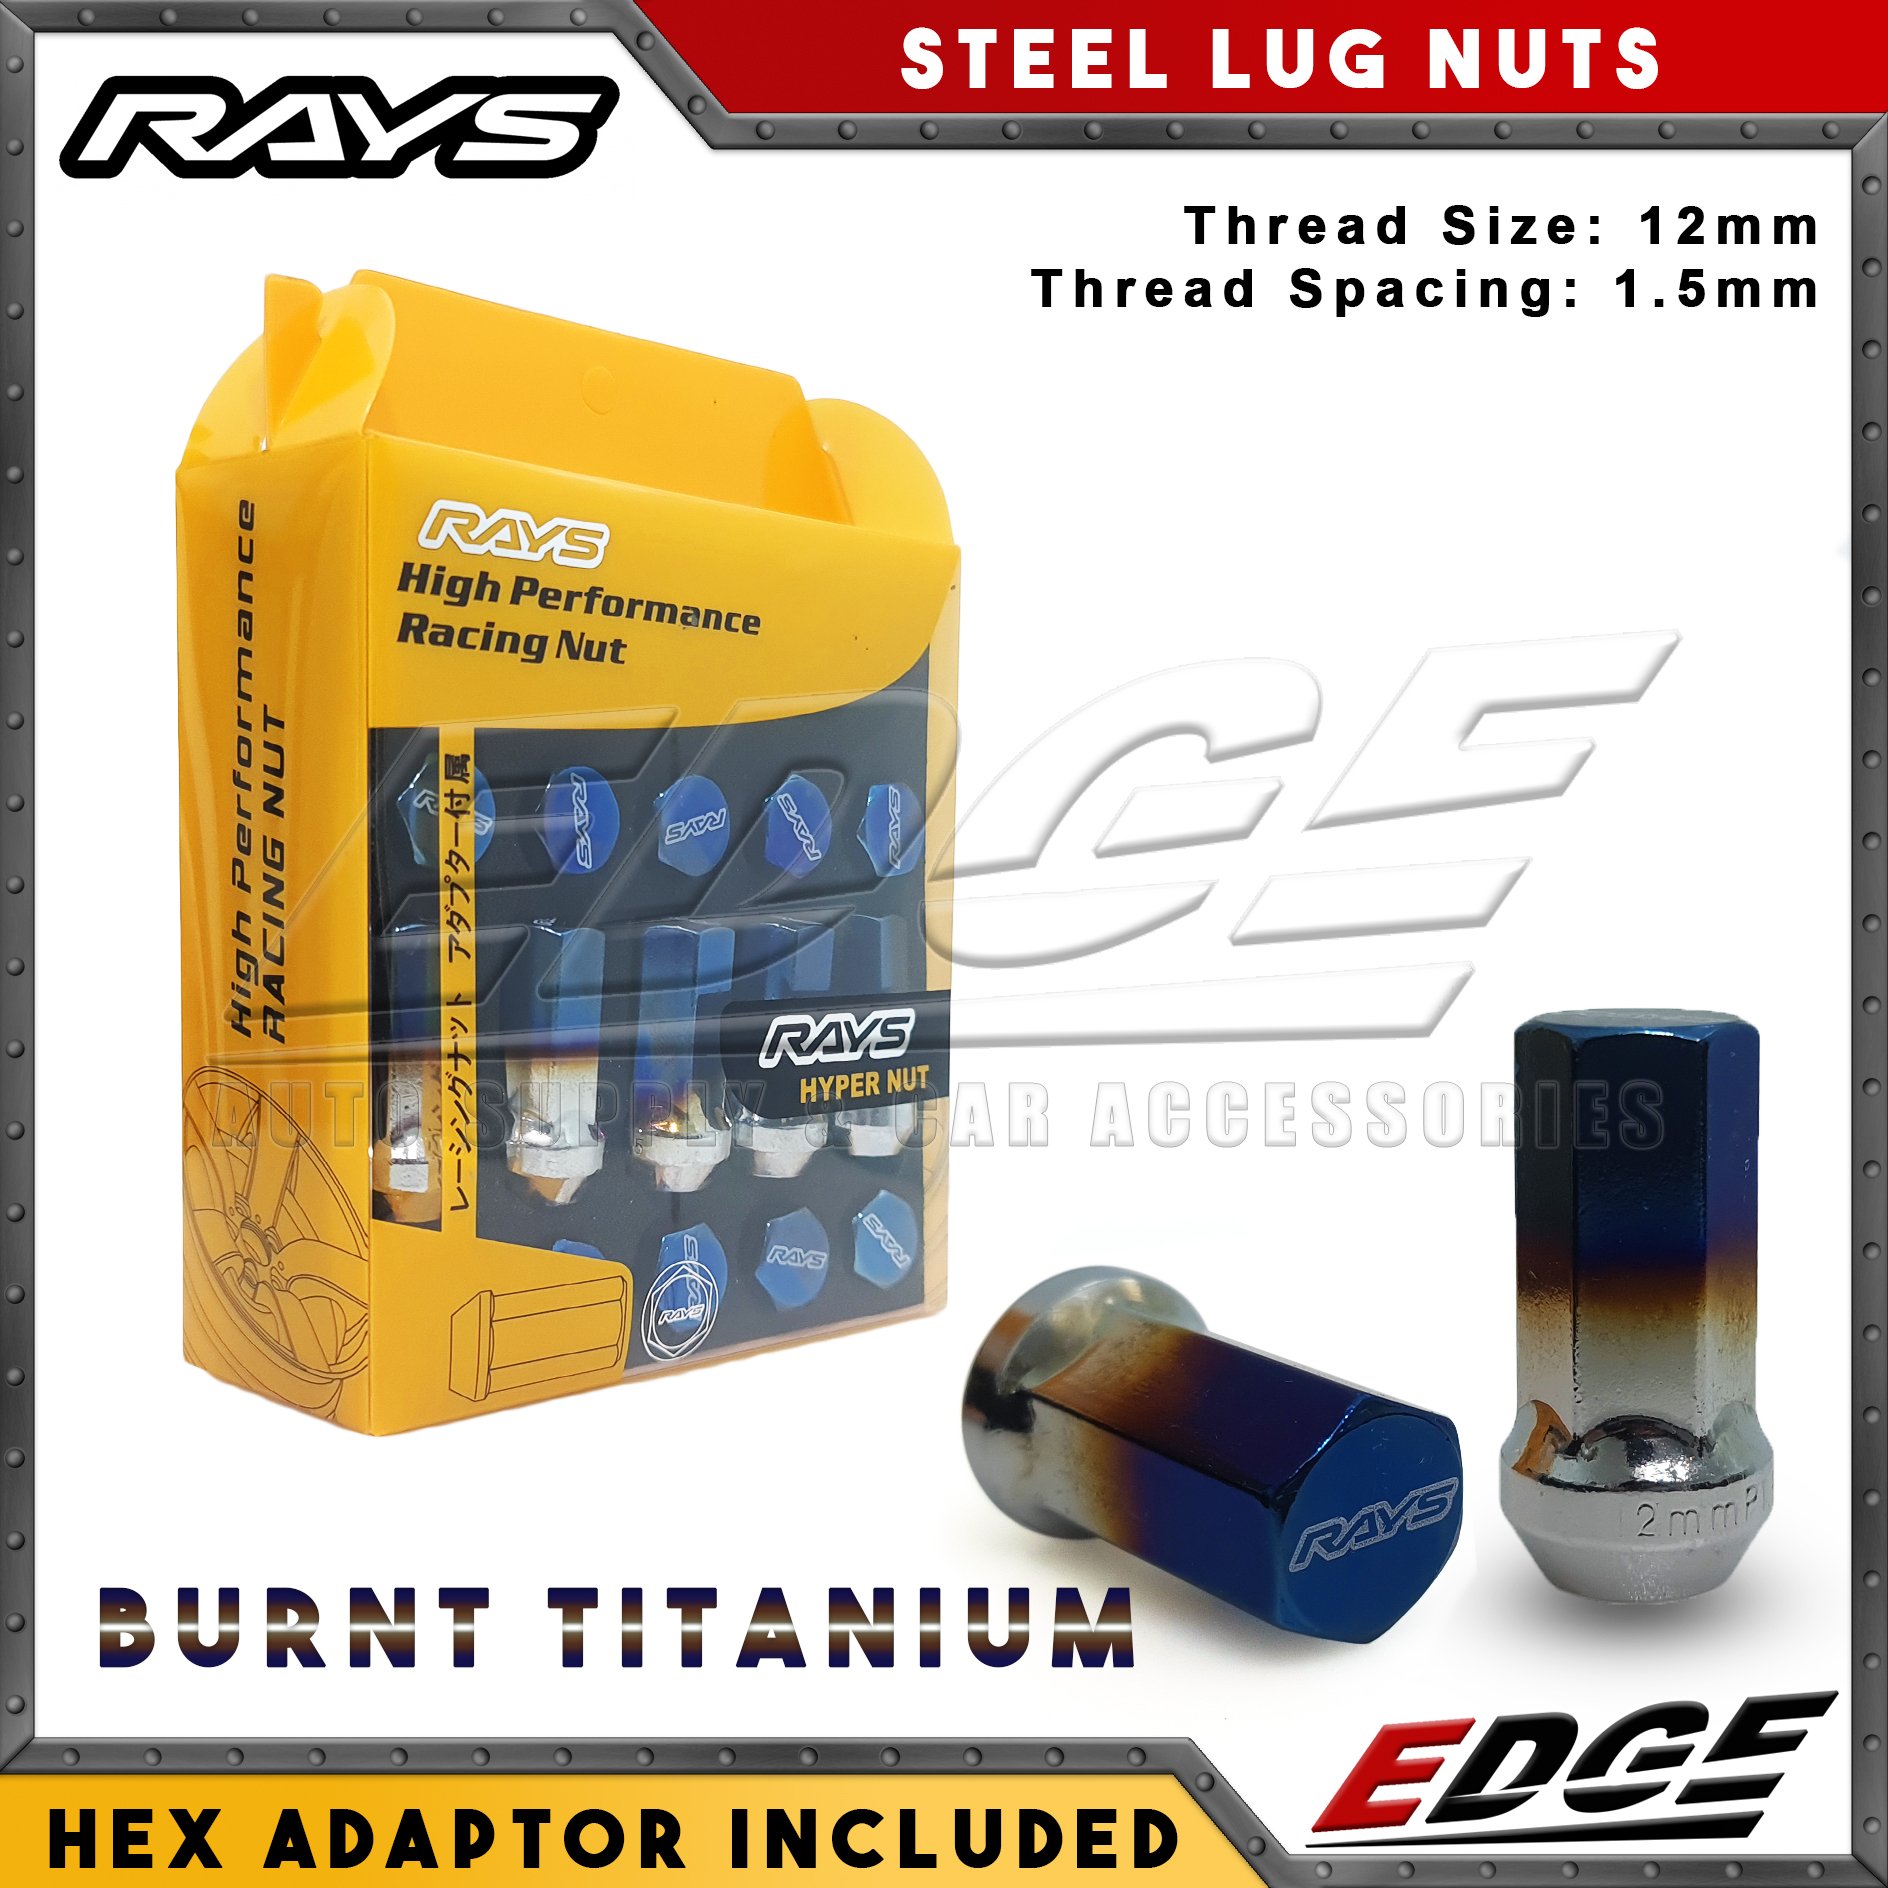 Rays Hyper Nut Steel Lug Nut 12mm x 1.5mm 20 pcs.(Red)